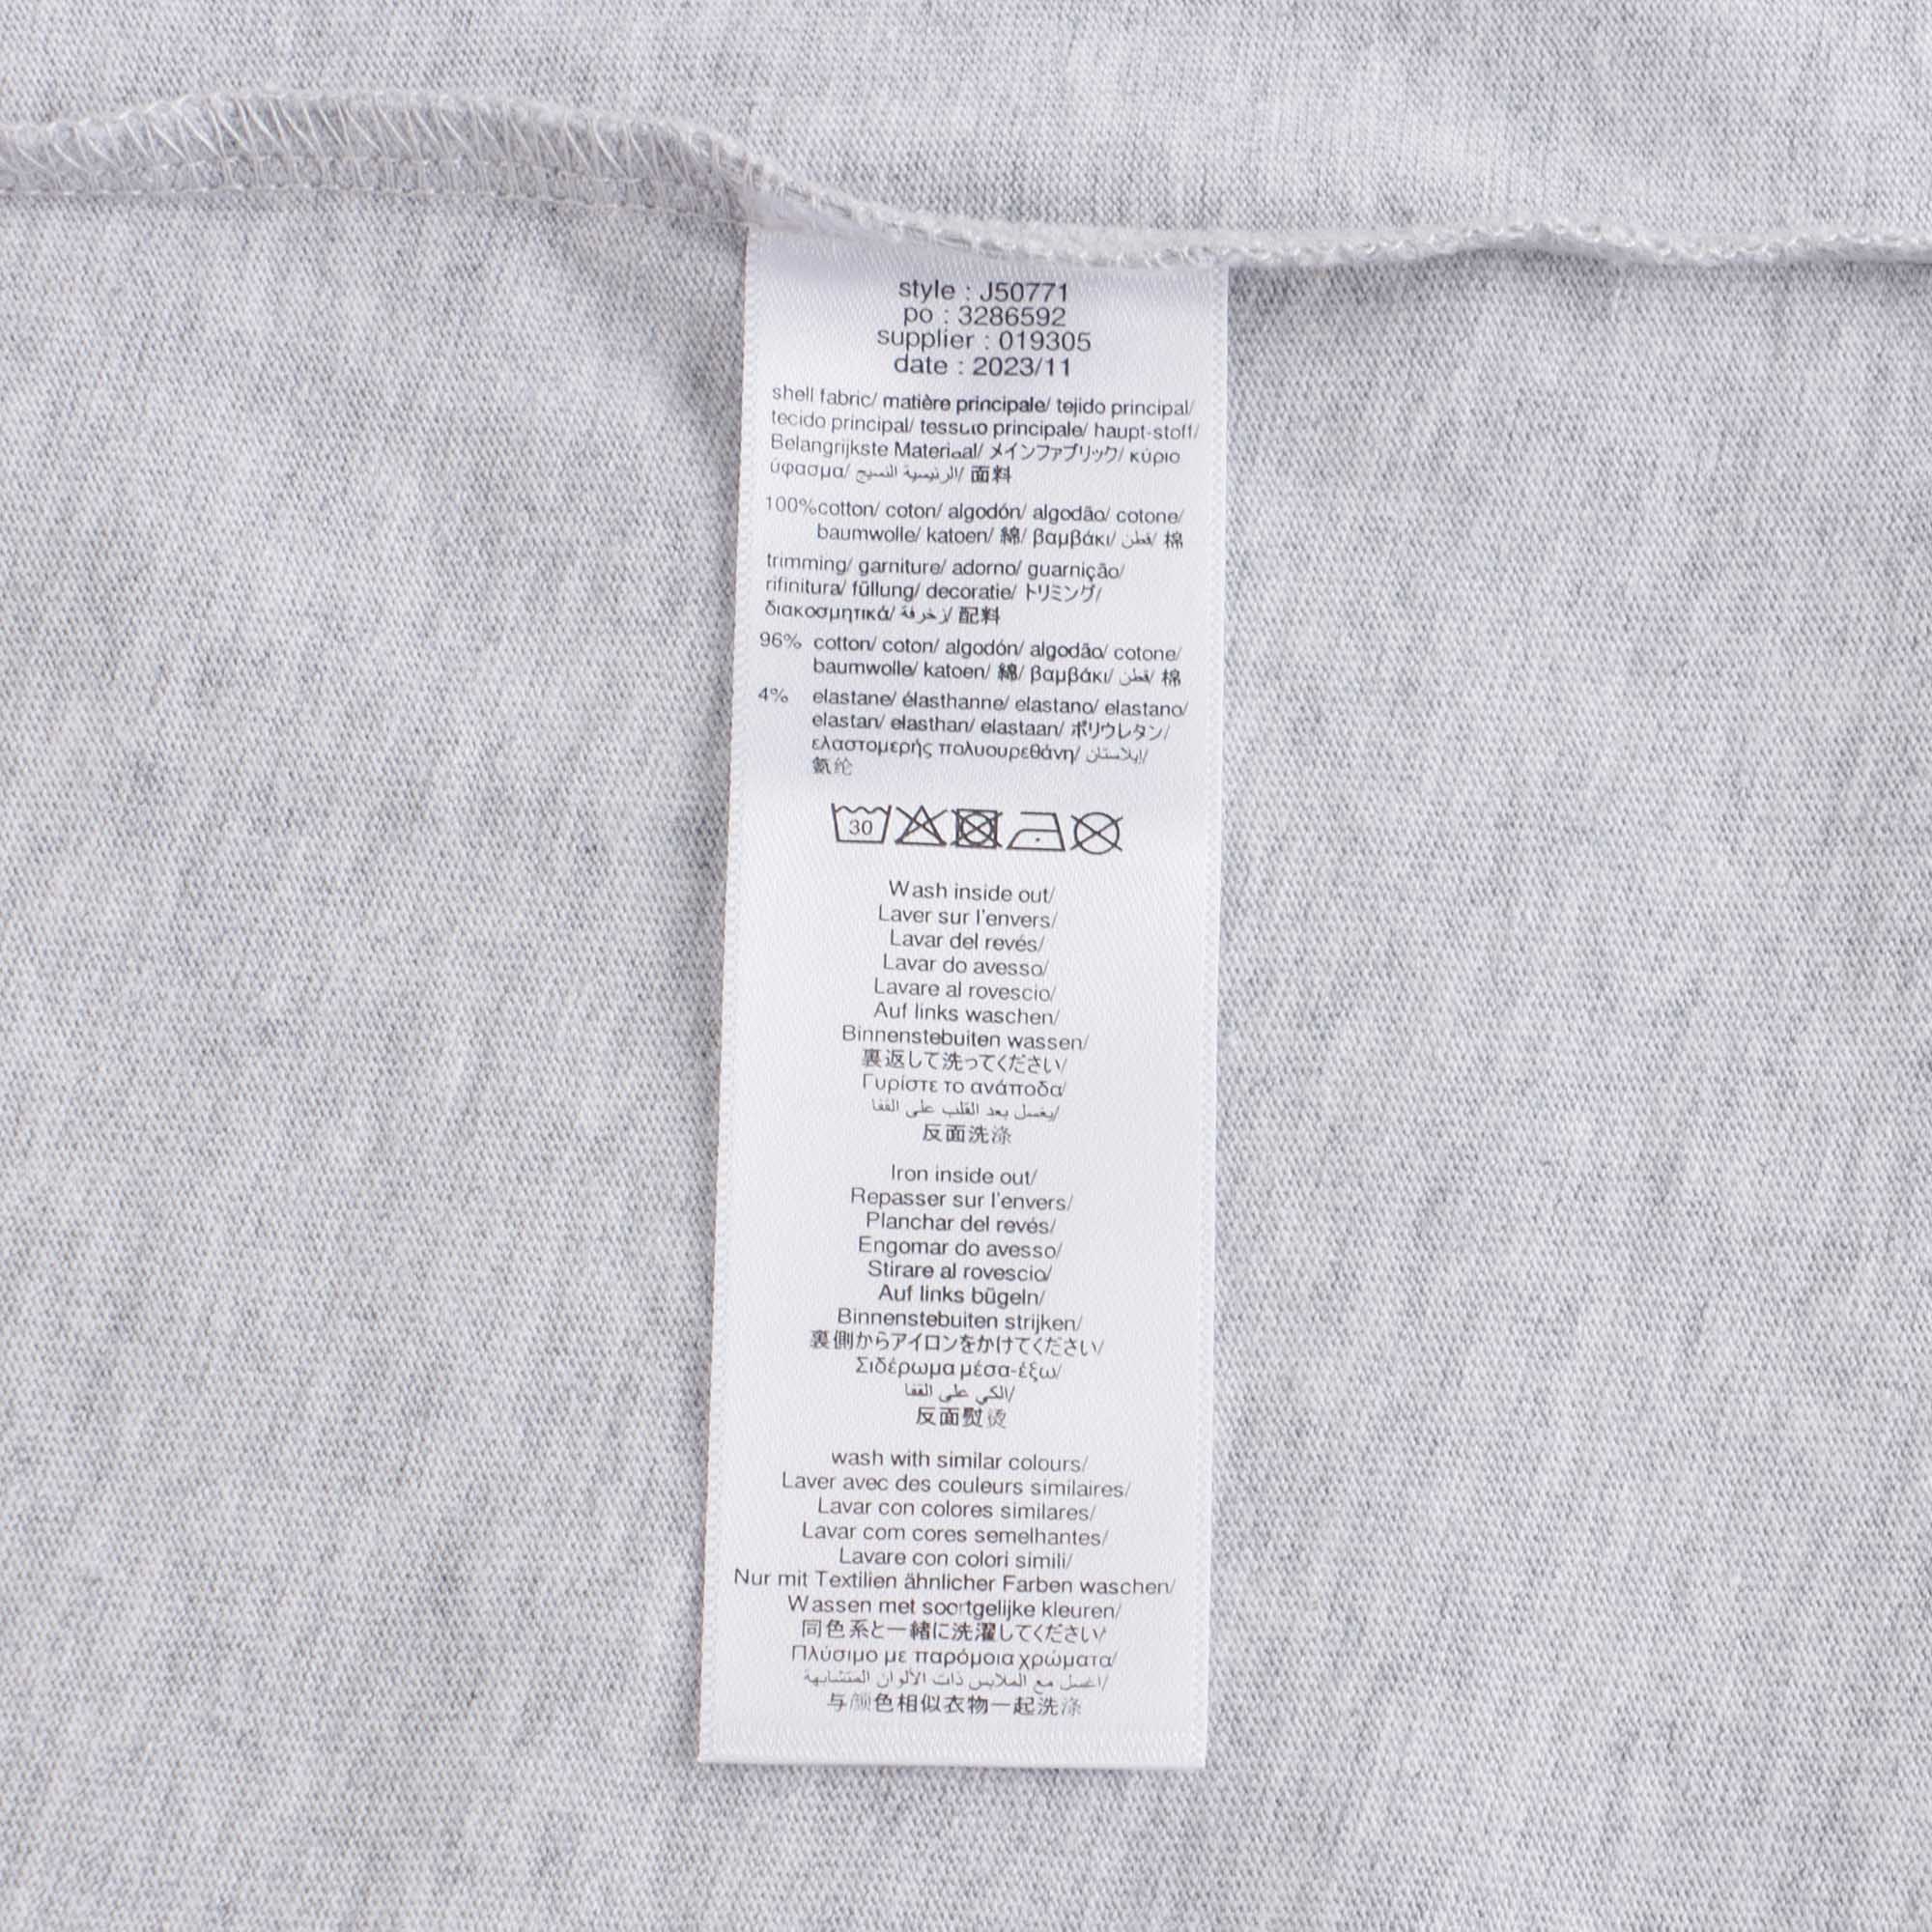 Boys Grey Logo Cotton T-Shirt